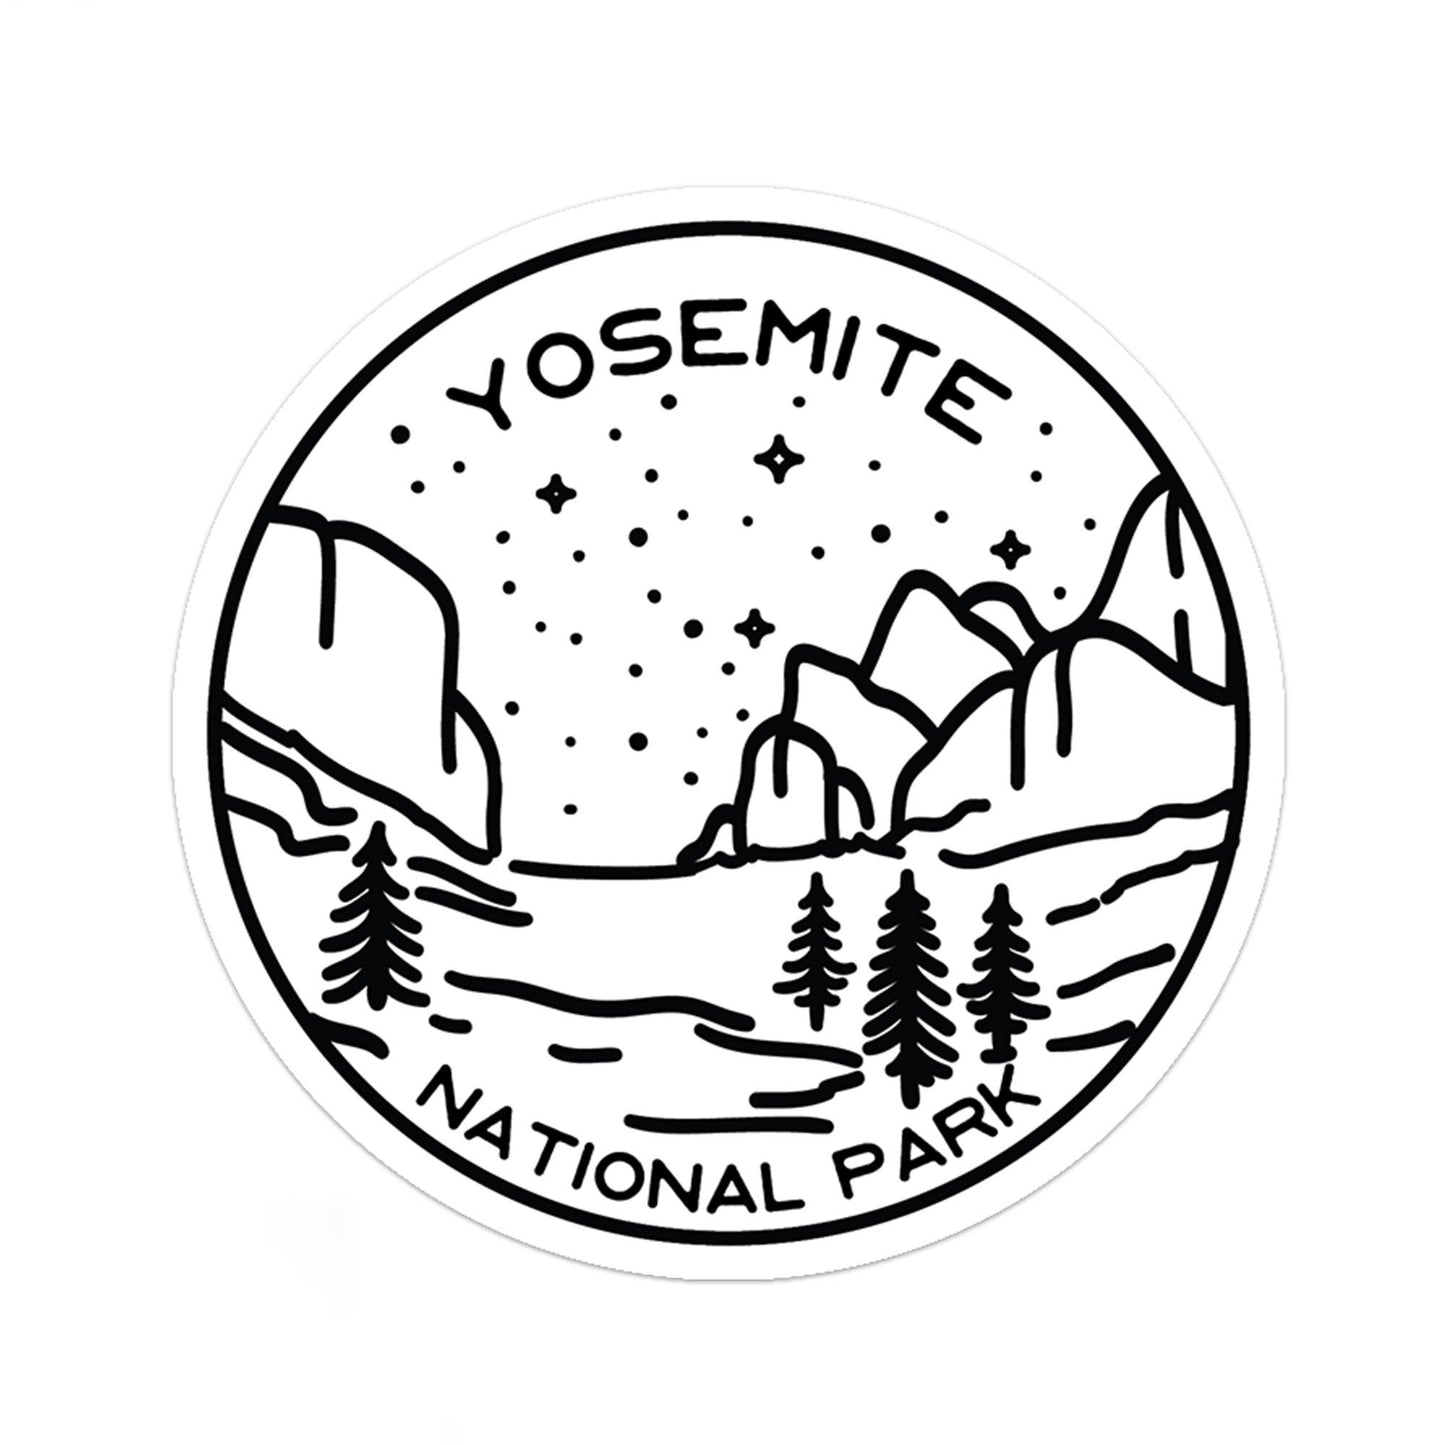 Yosemite National Park Sticker: 2"